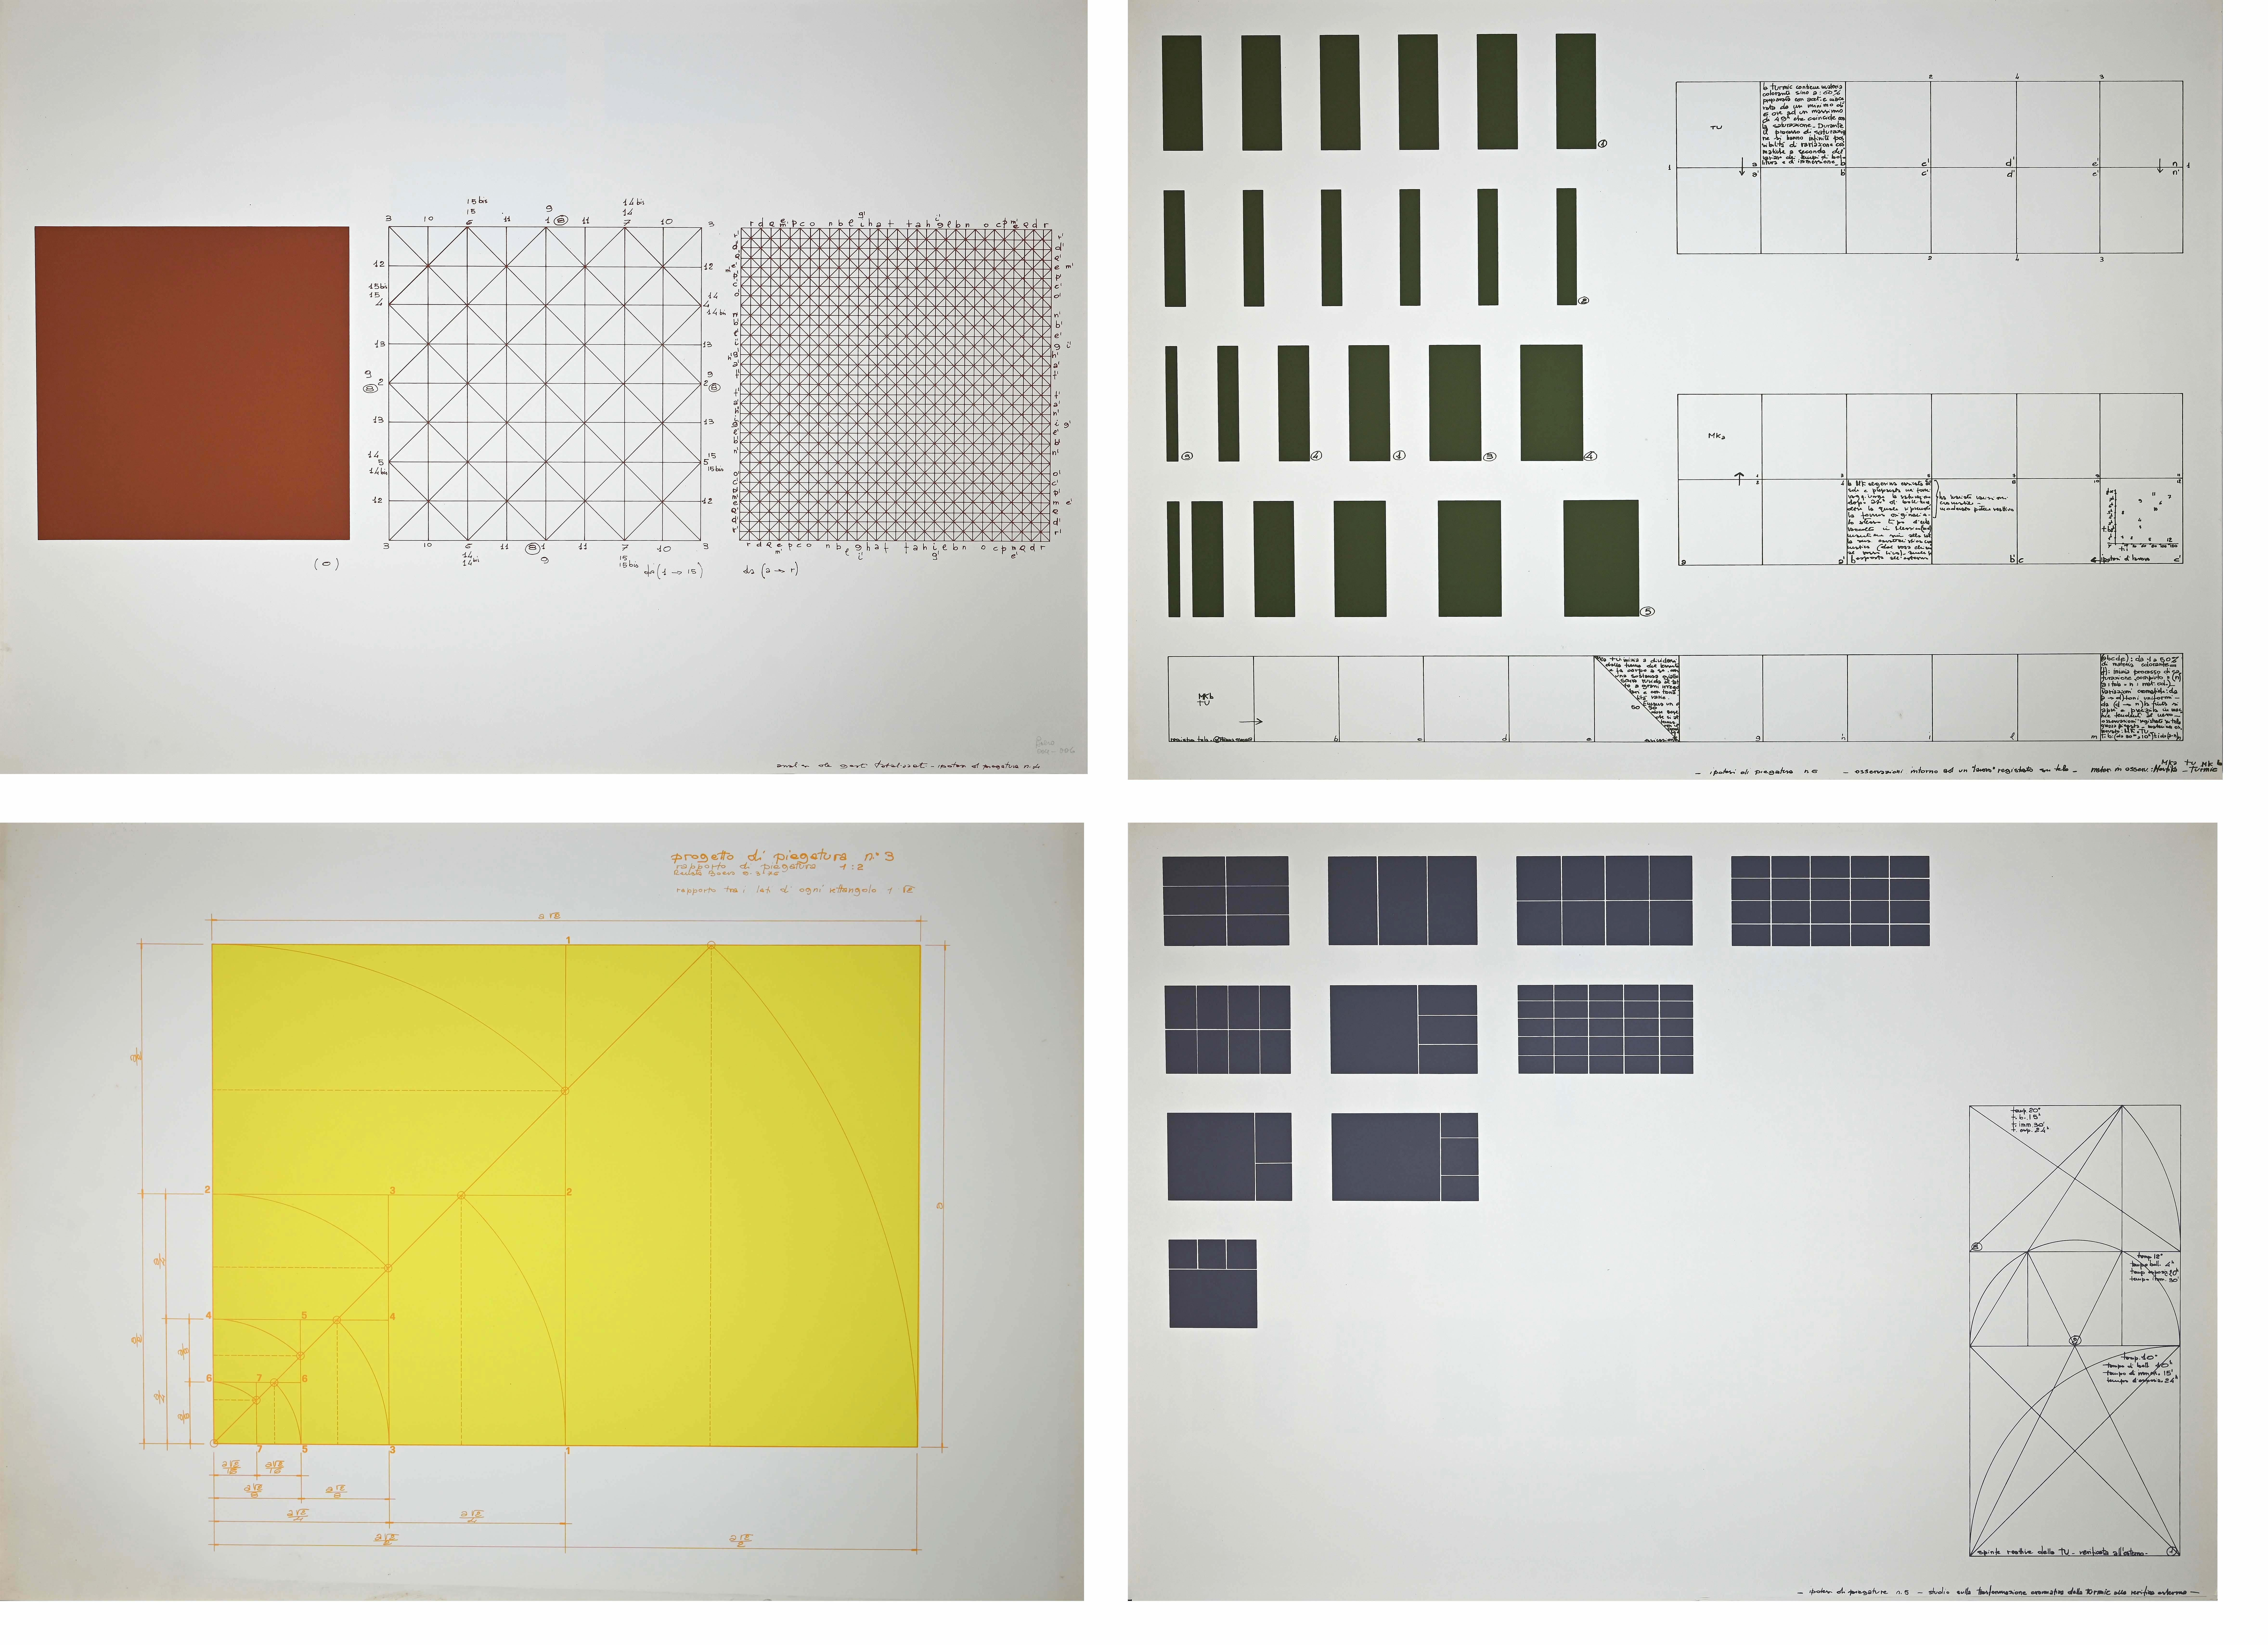 Renata Boero Abstract Print - Ipotesi di piegatura:3, 4, 5, 6 -Set of 4 Screen Prints by R. Boero - 1980